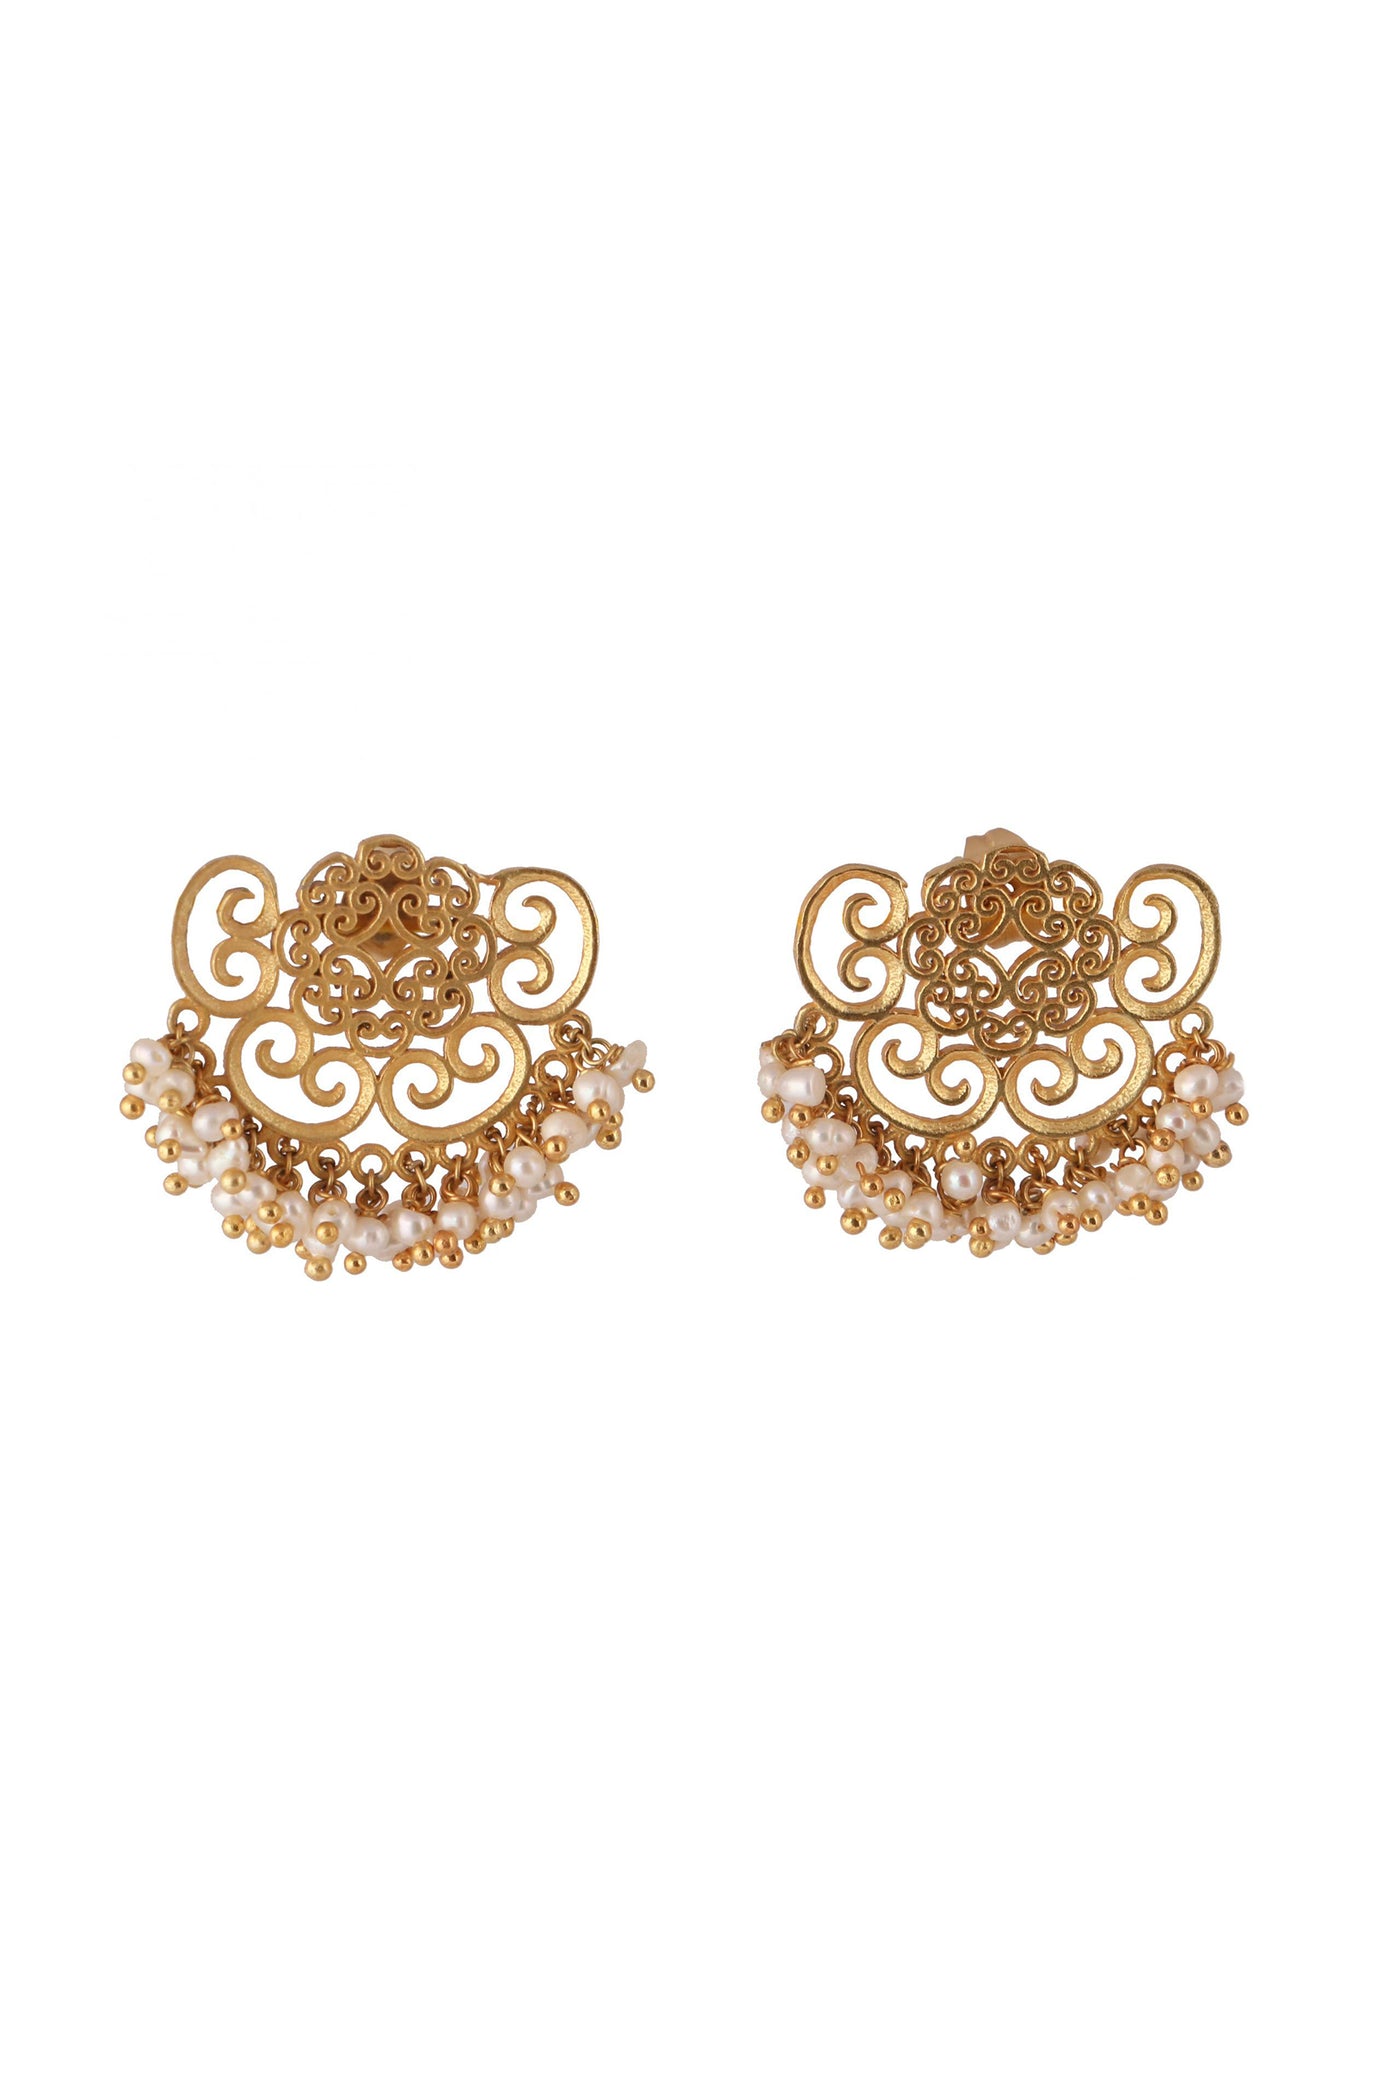 Zariin jewellery Delicate Tales Gift Box gold online shopping melange singapore indian designer wear